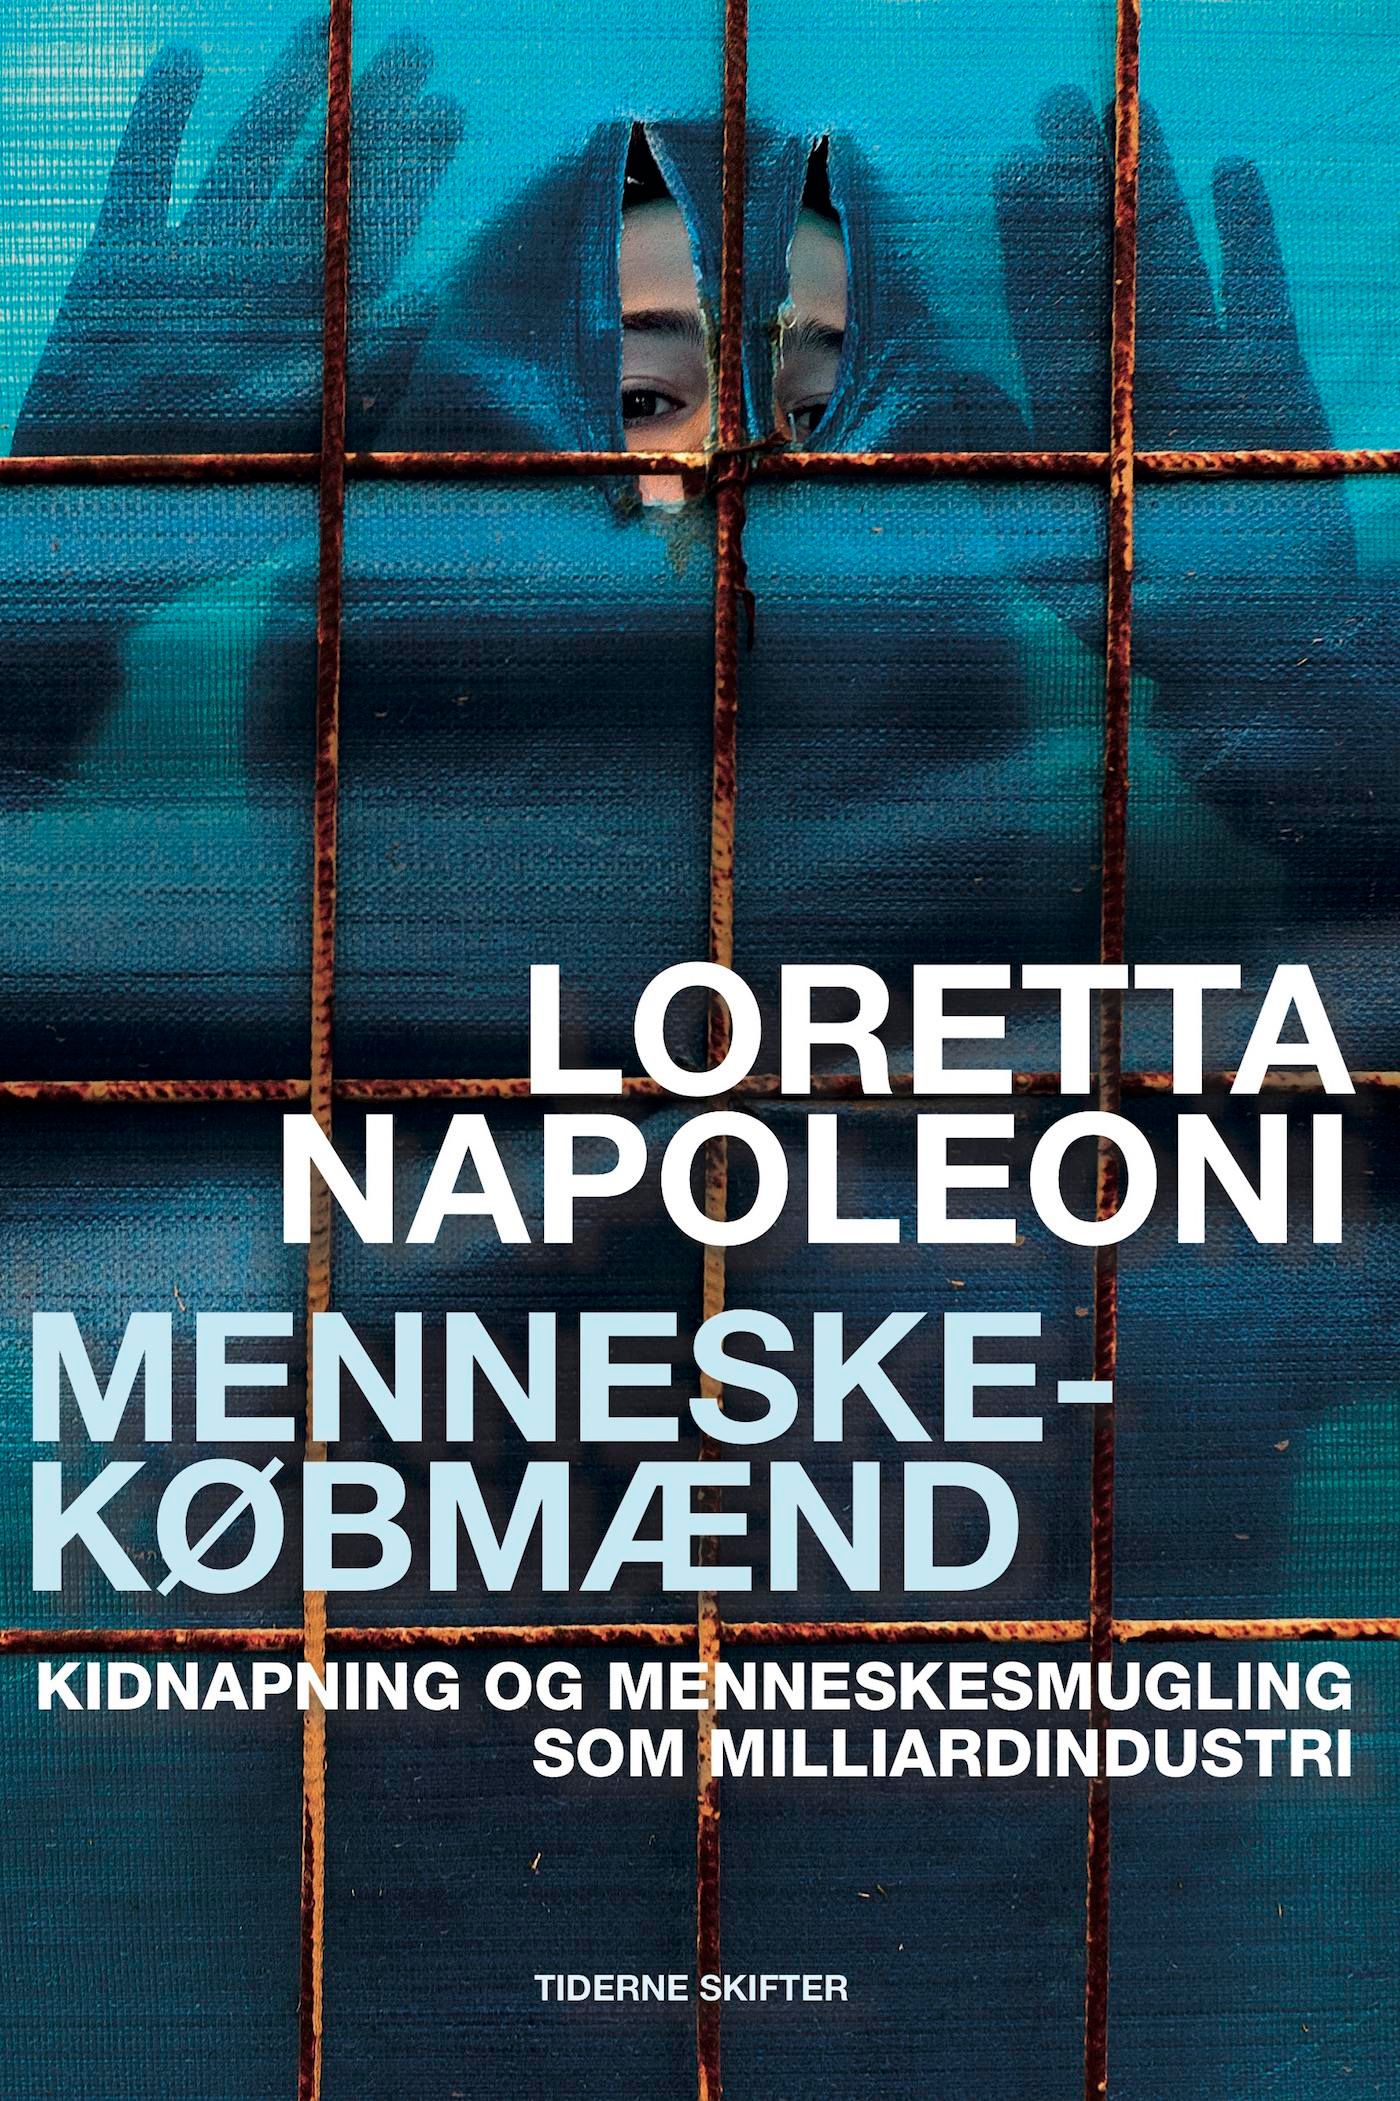 Menneskekøbmænd, eBook by Loretta Napoleoni